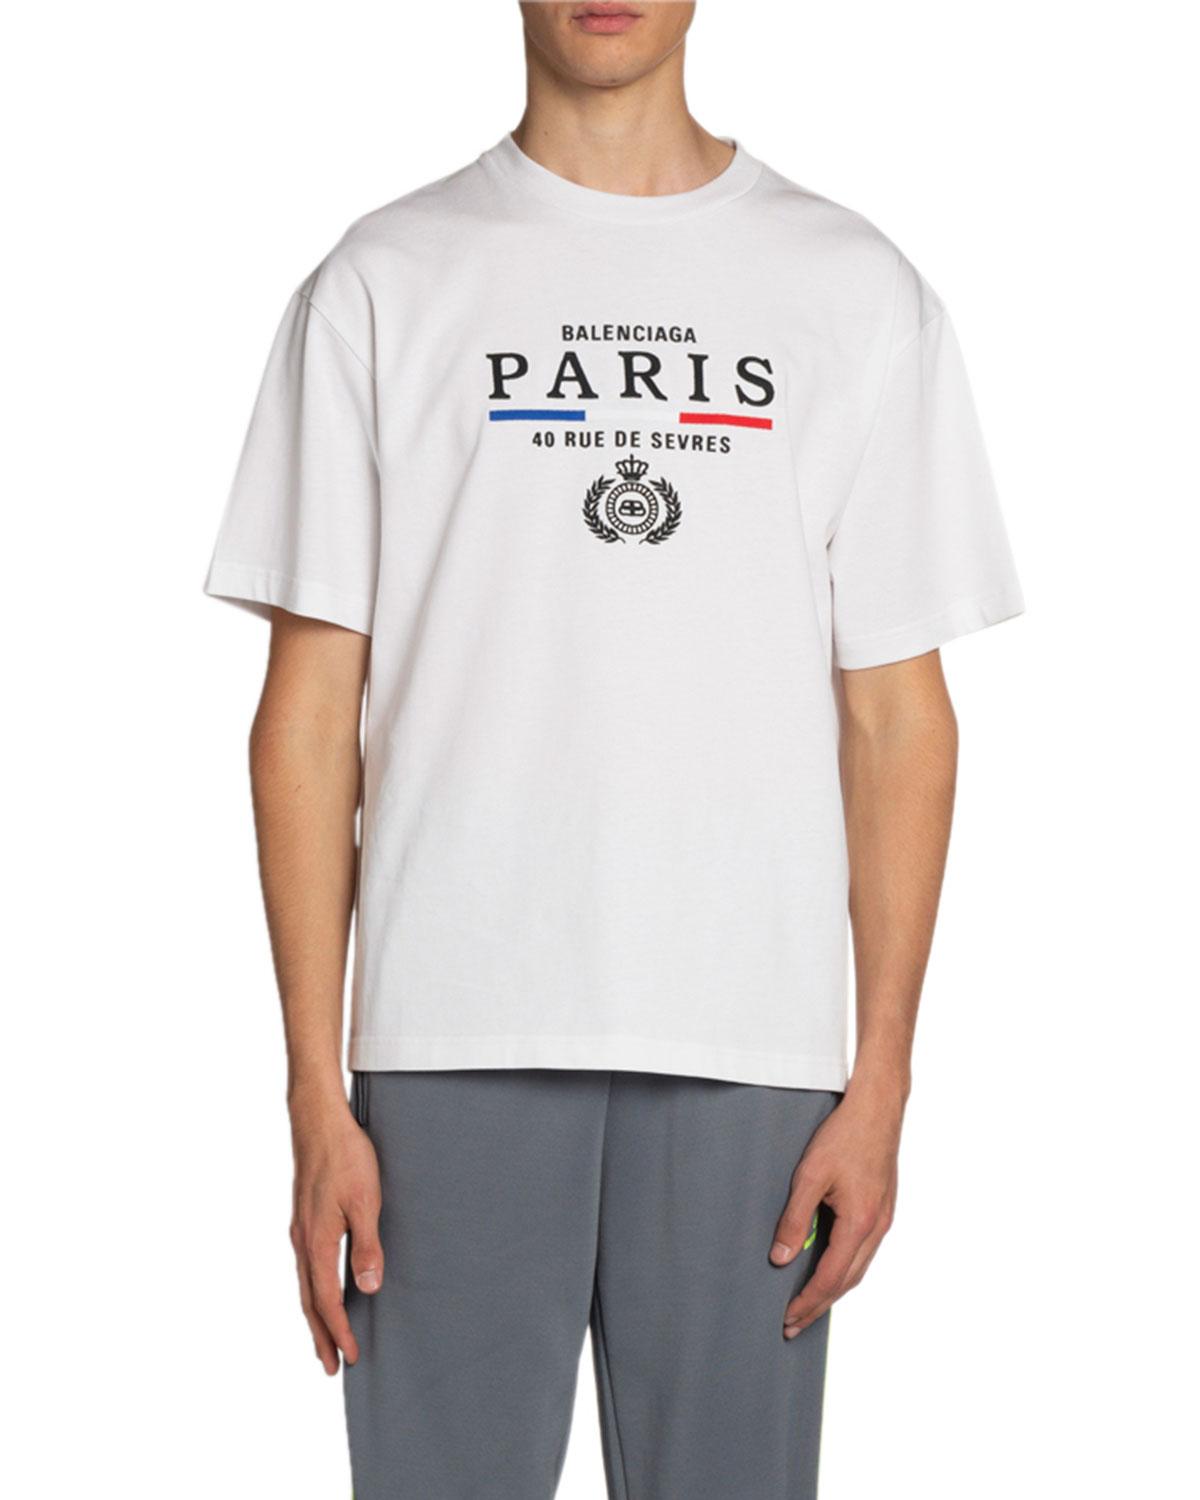 Balenciaga Cotton Men's Paris Flag Crewneck T-shirt in White for Men - Lyst